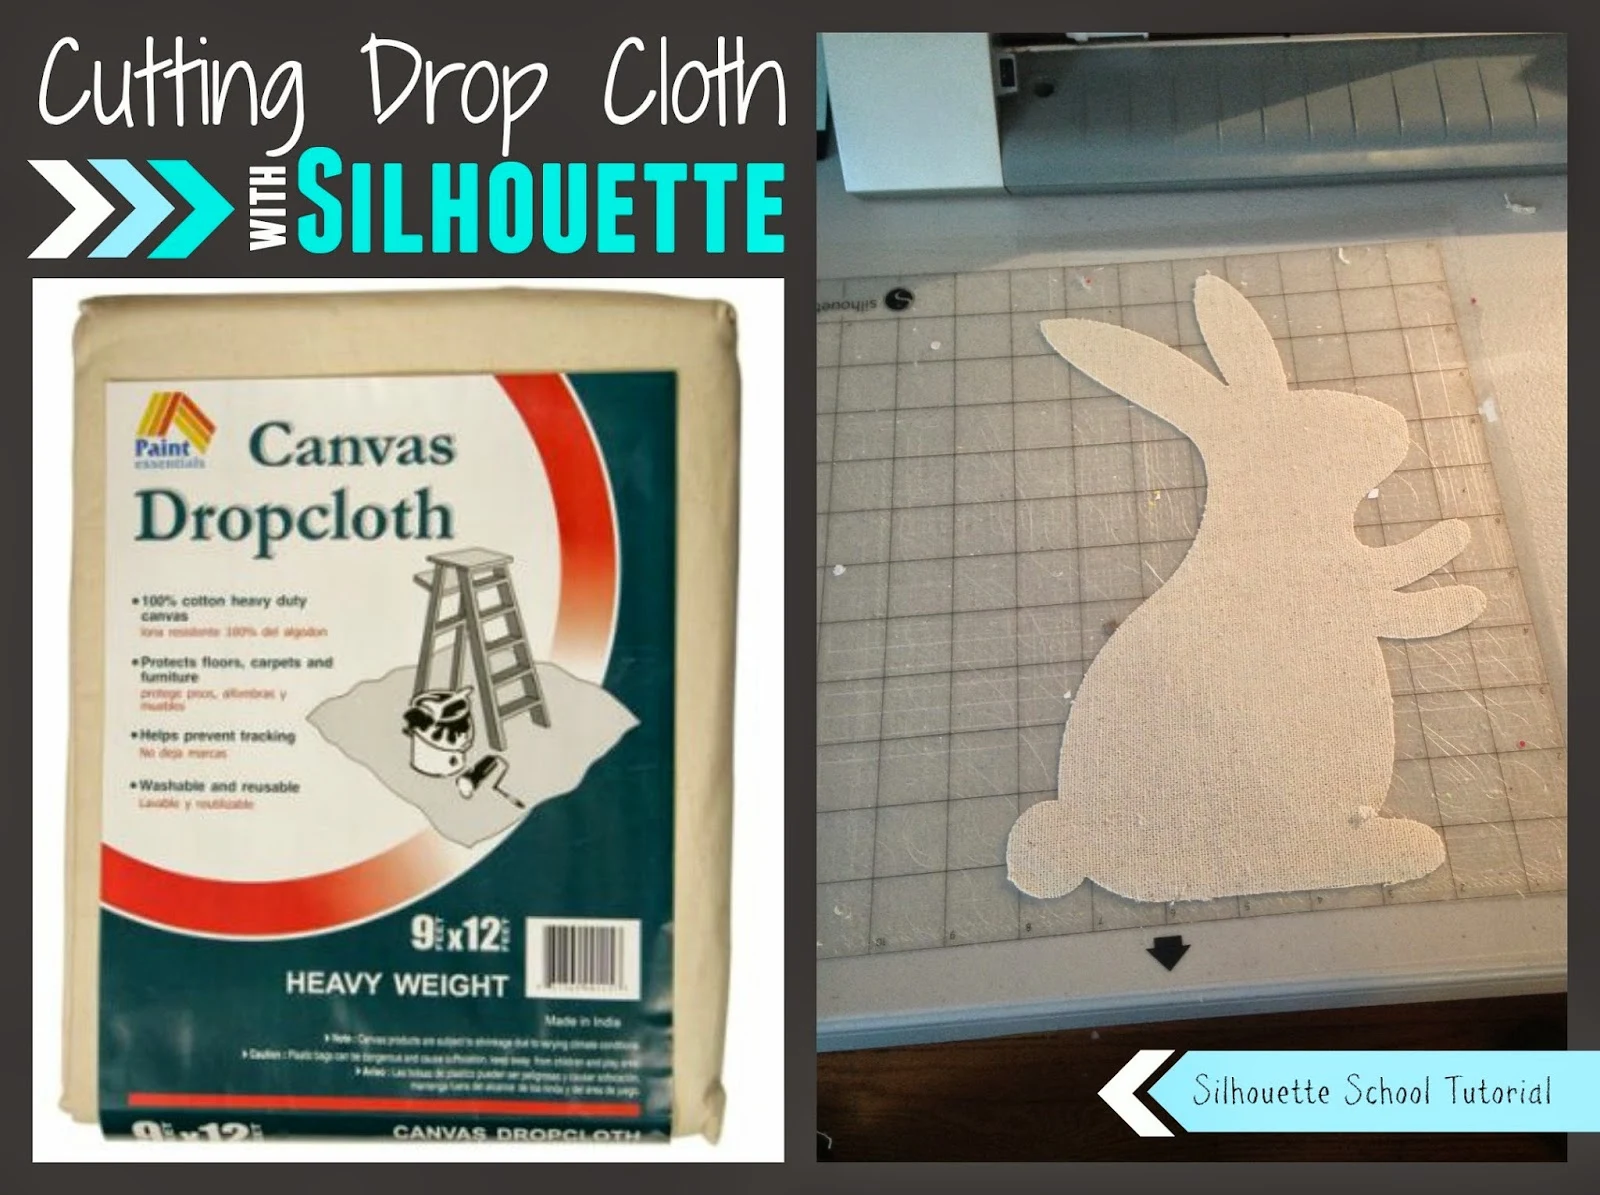 Silhouette Cameo, cut drop cloth, Silhouette tutorial